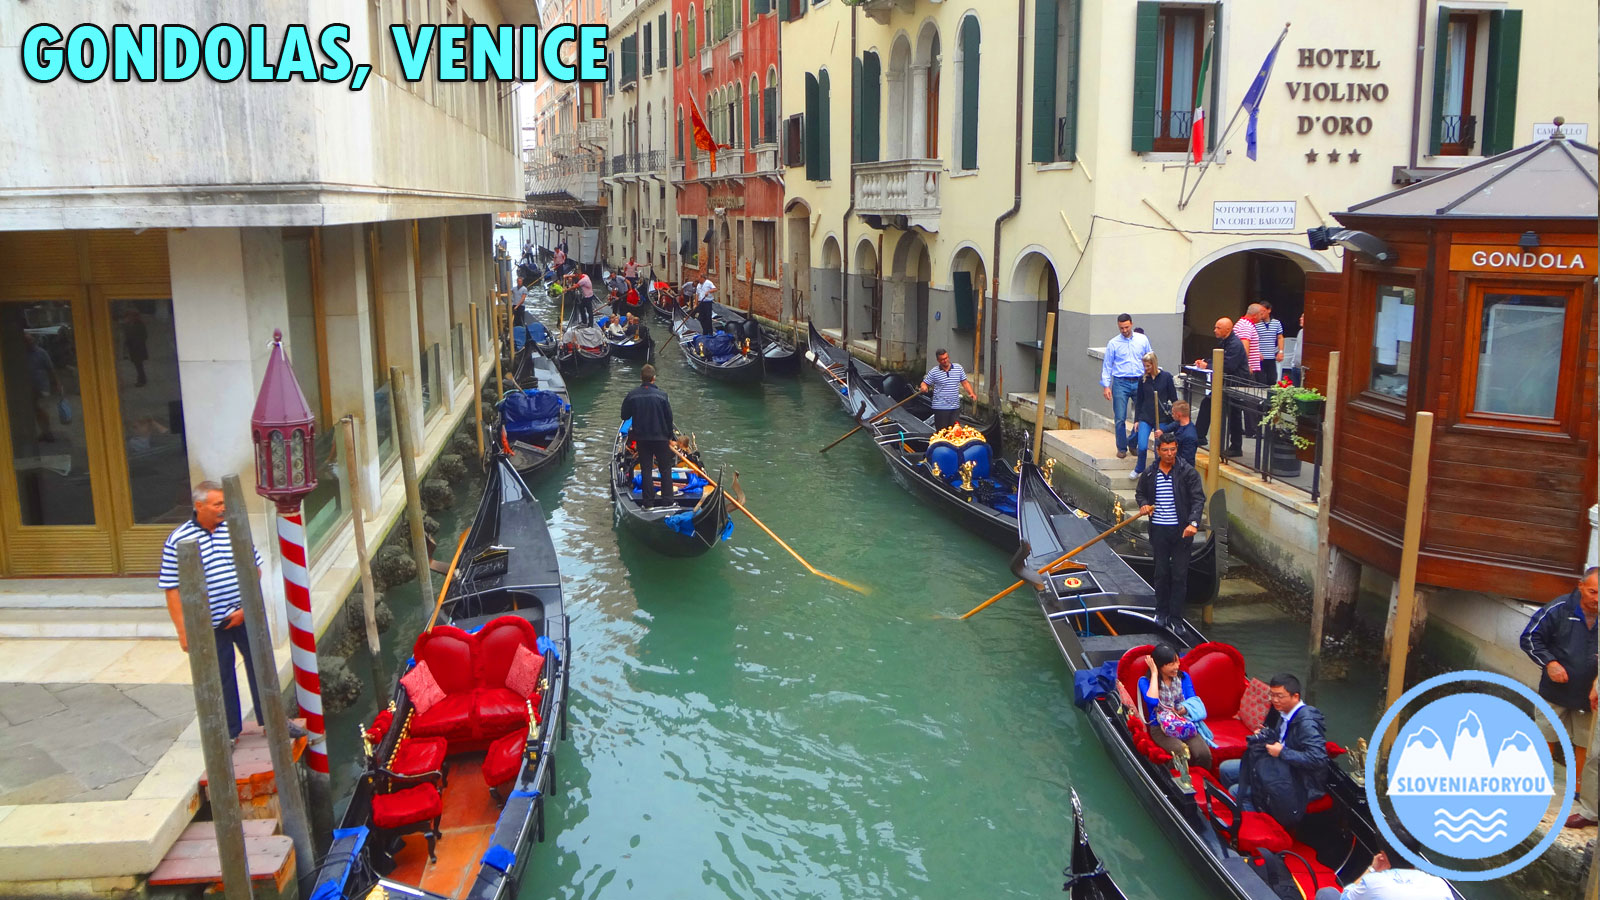 Gondolas, Venice, Sloveniaforyou